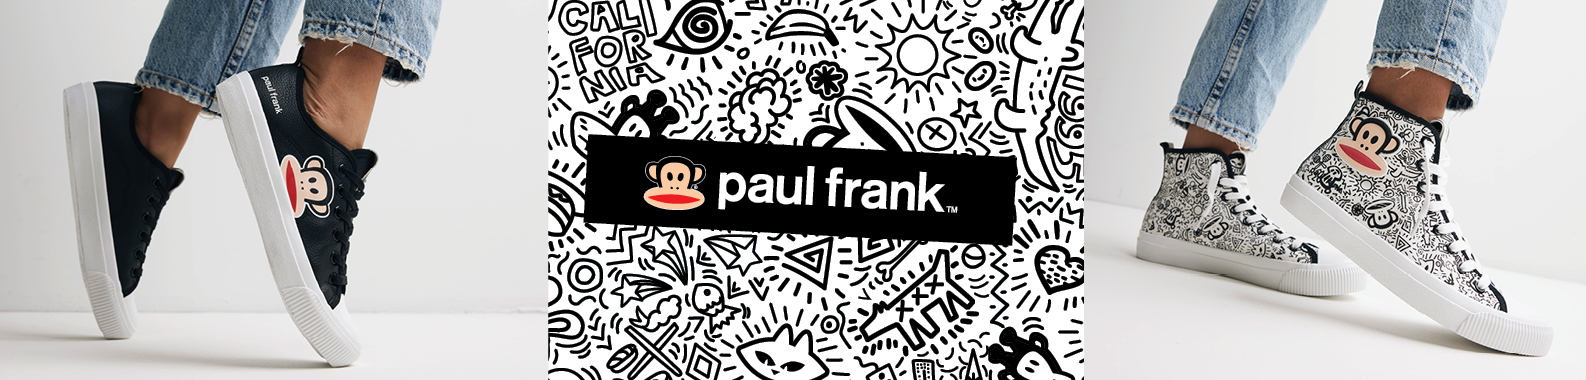 Paul Frank brand header image